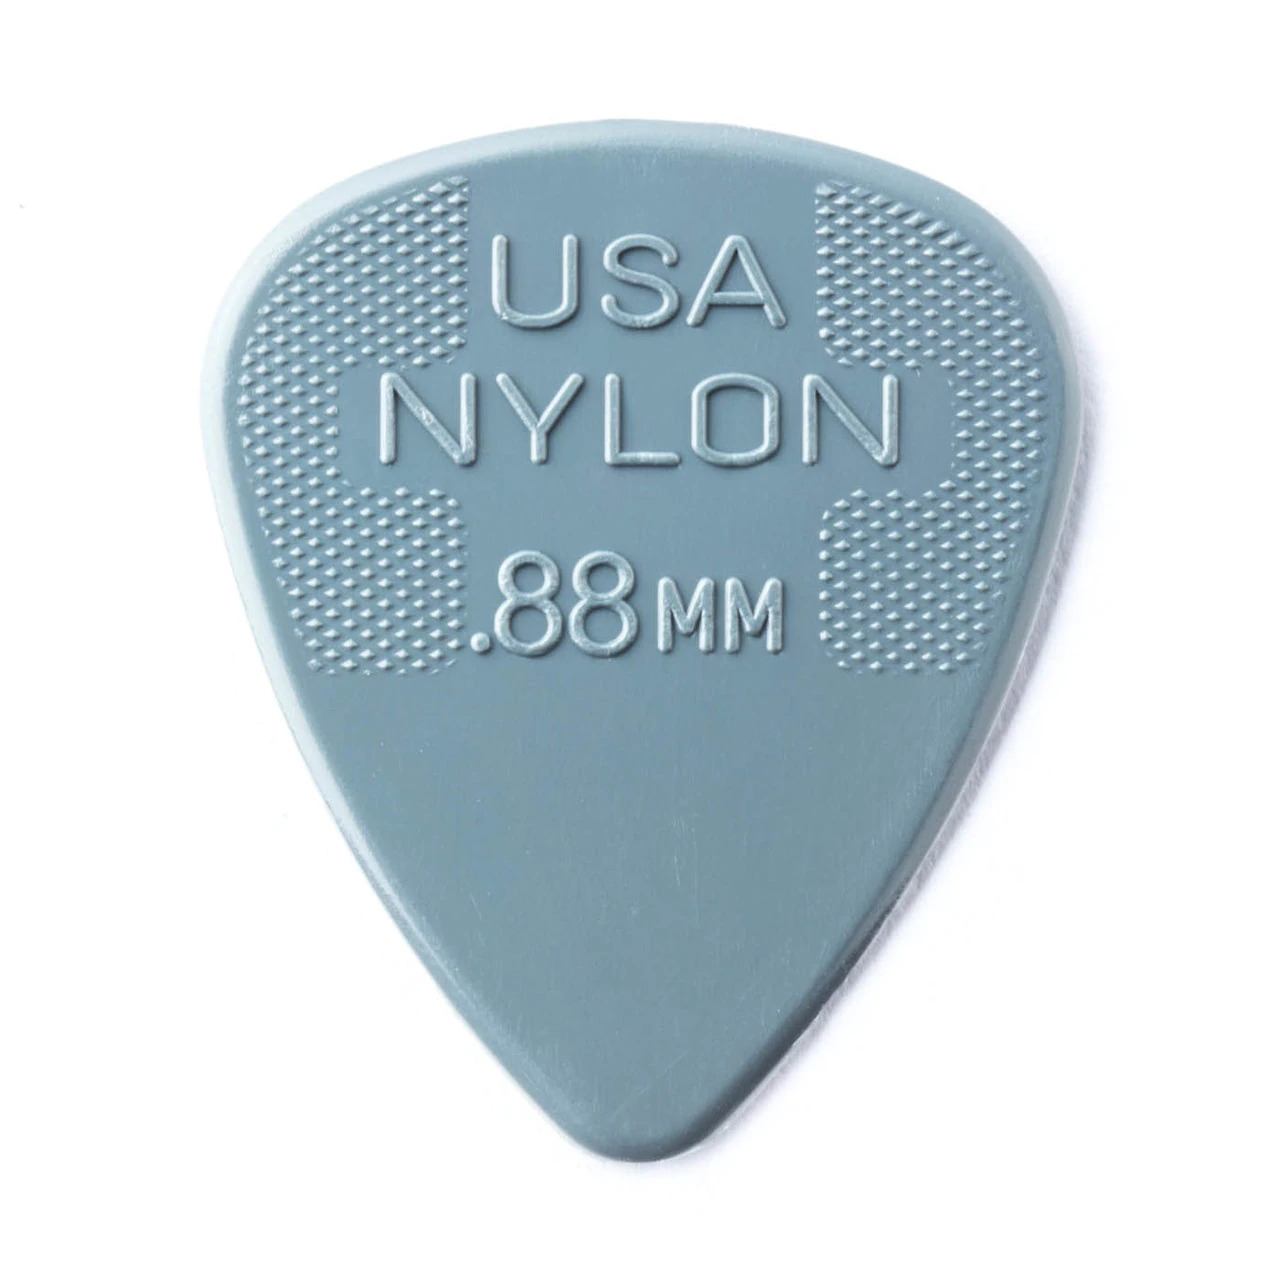 Dunlop 44P088 Nylon® Standard .88mm - 12 Pack